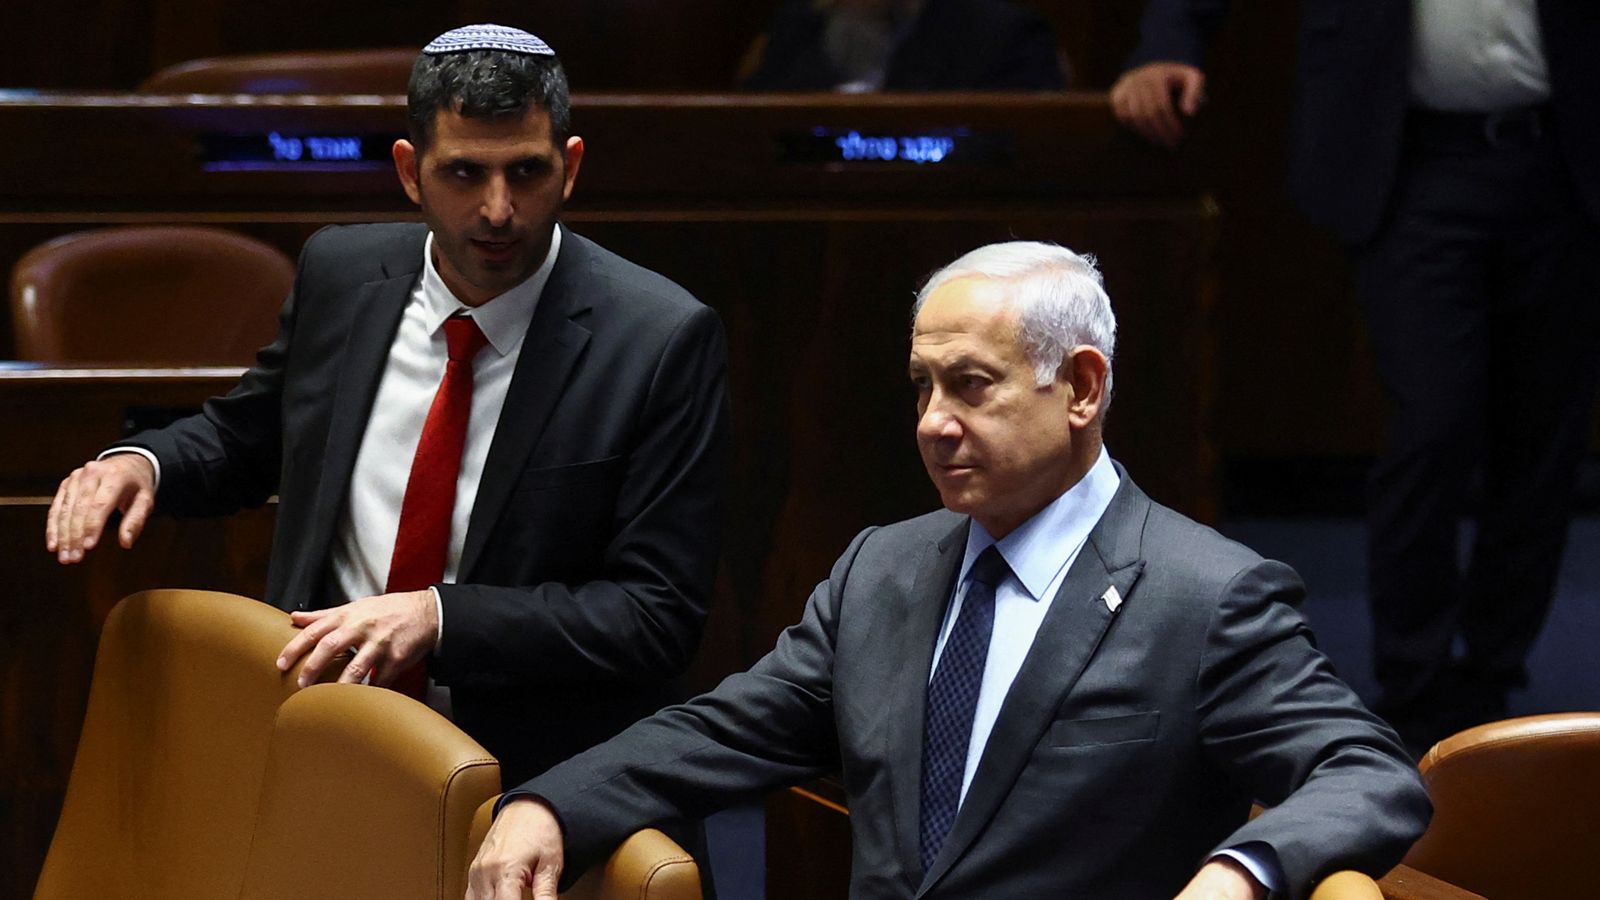 Benjamin Netanyahu delays controversial overhaul of Israel's judiciary, says coalition partner